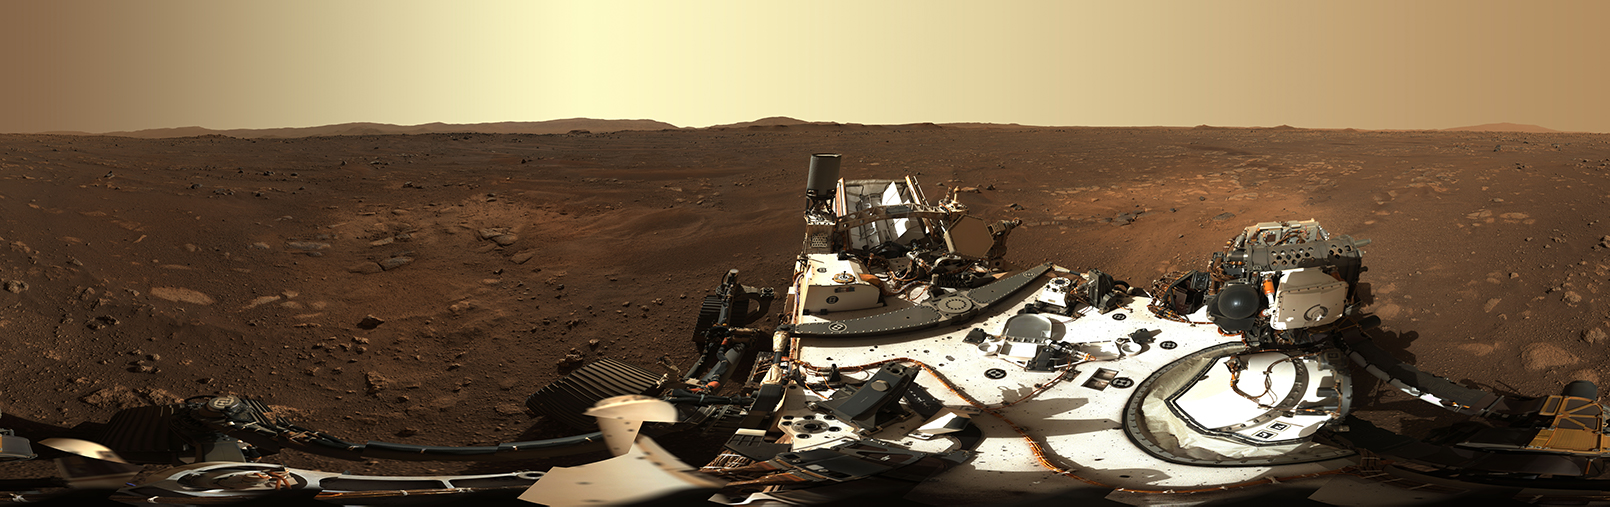 Marte: una mirada profunda